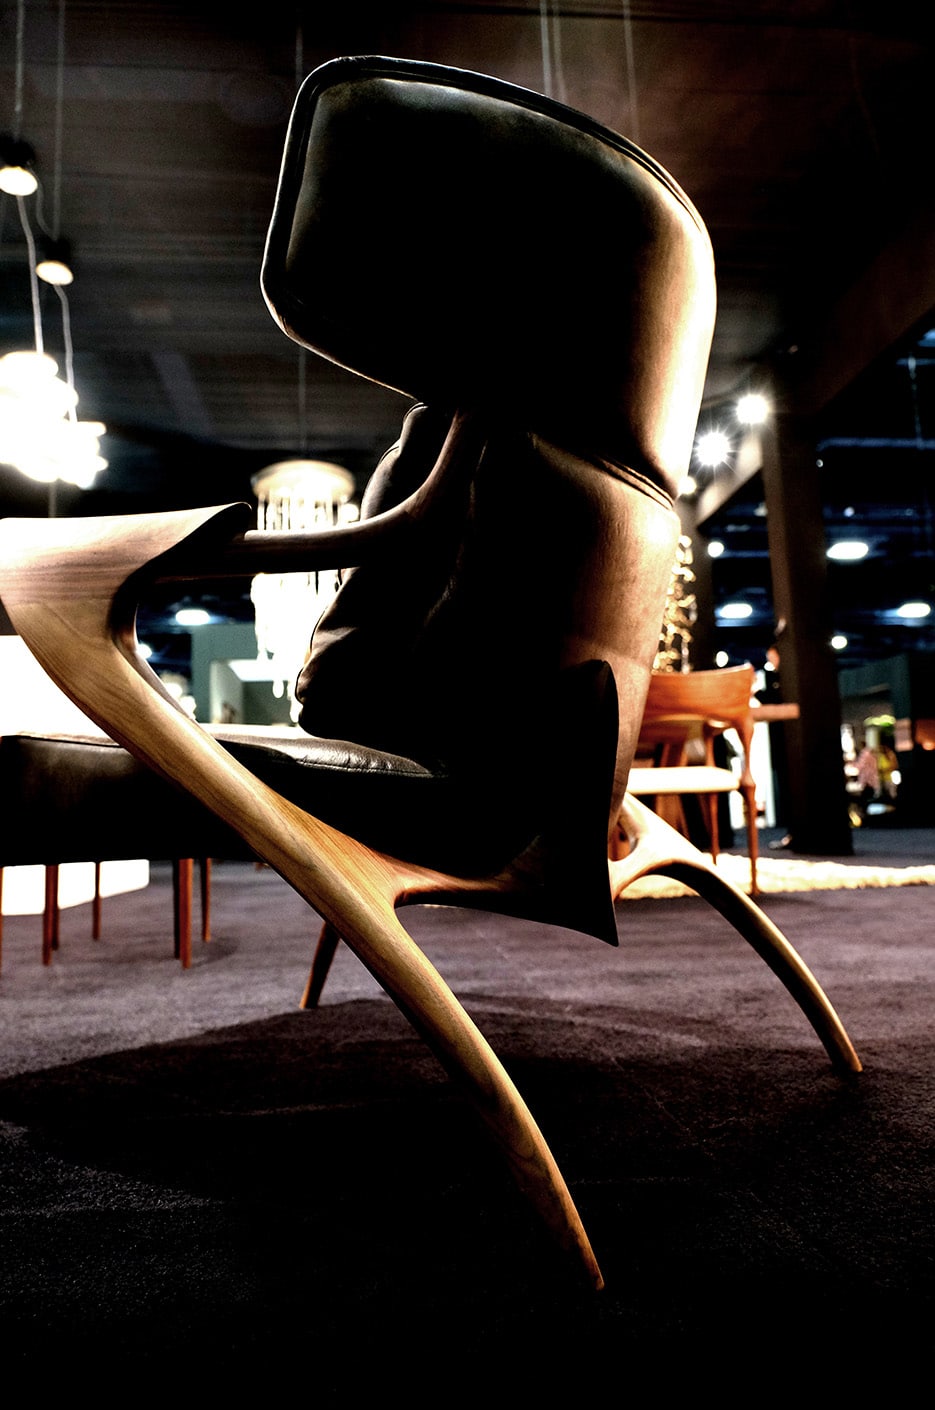 ISADORA armchair design paco camus